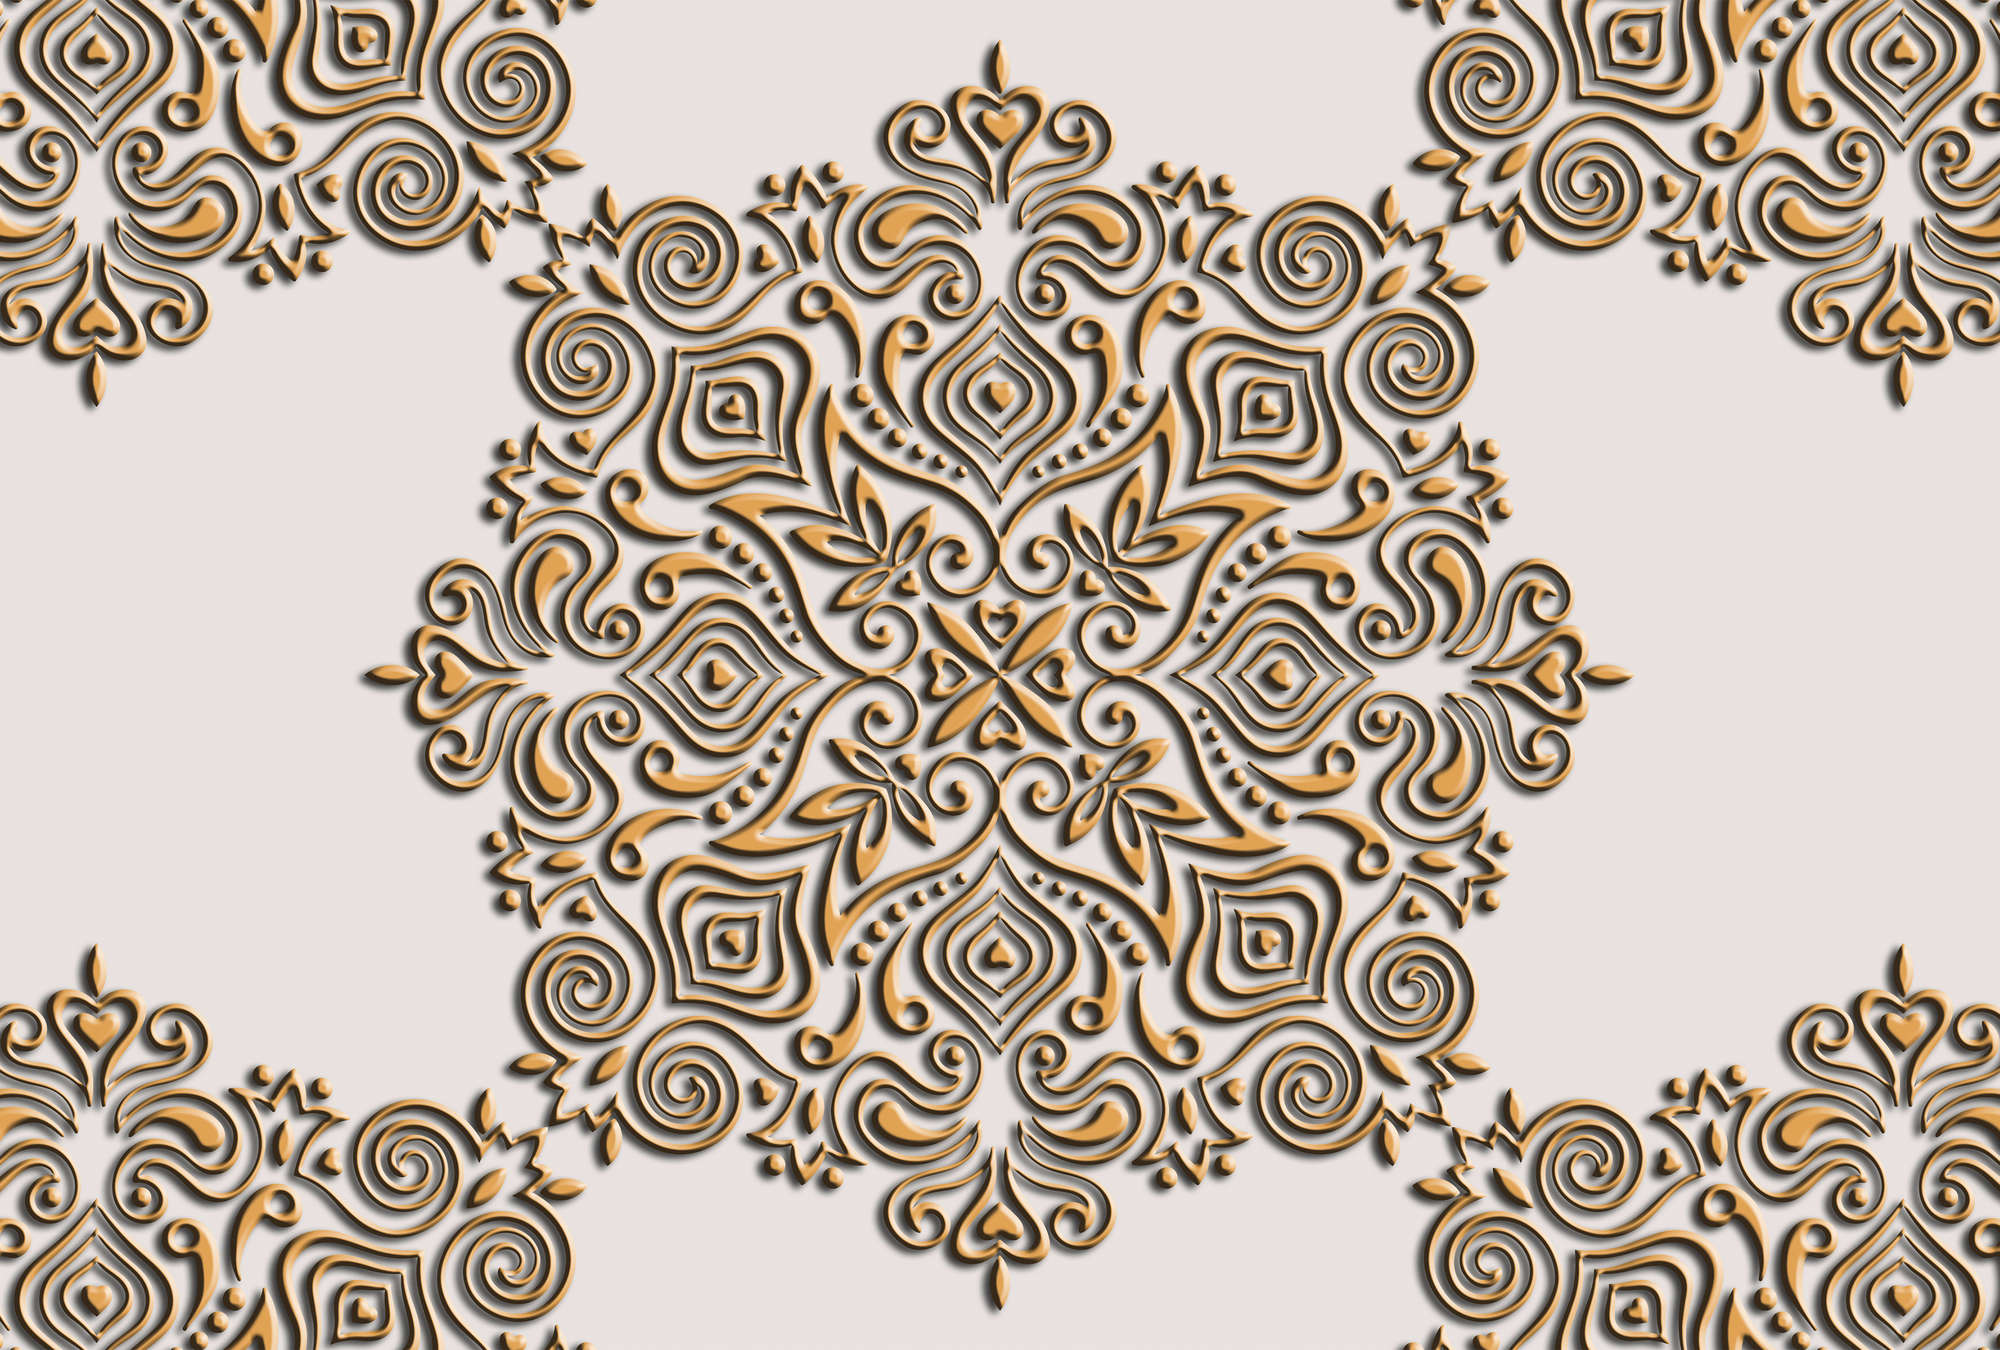             Photo wallpaper ornament graphic with geometric gold design
        